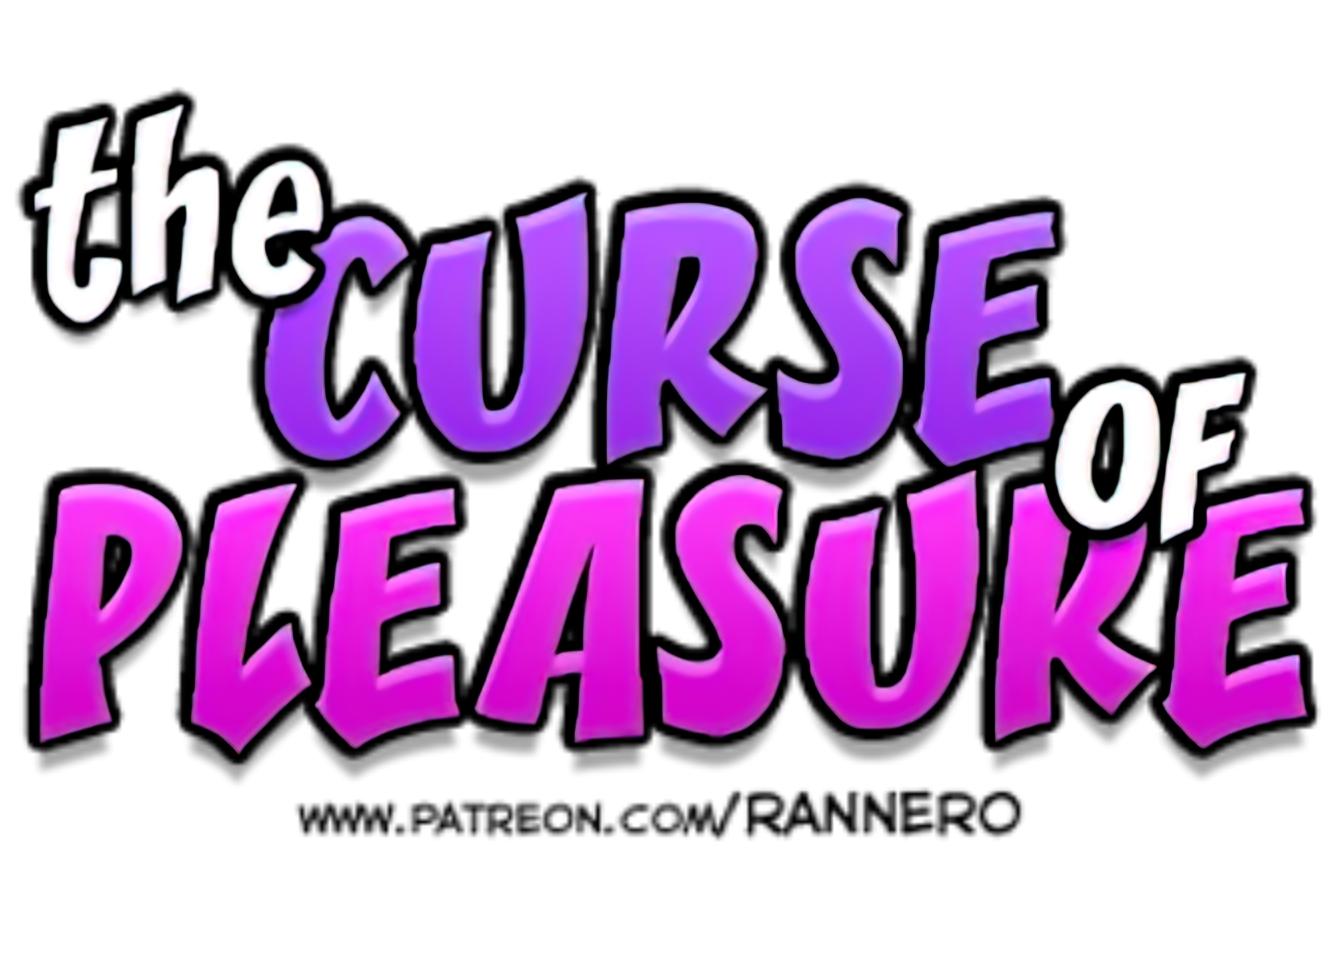 The Curse Of Pleasure